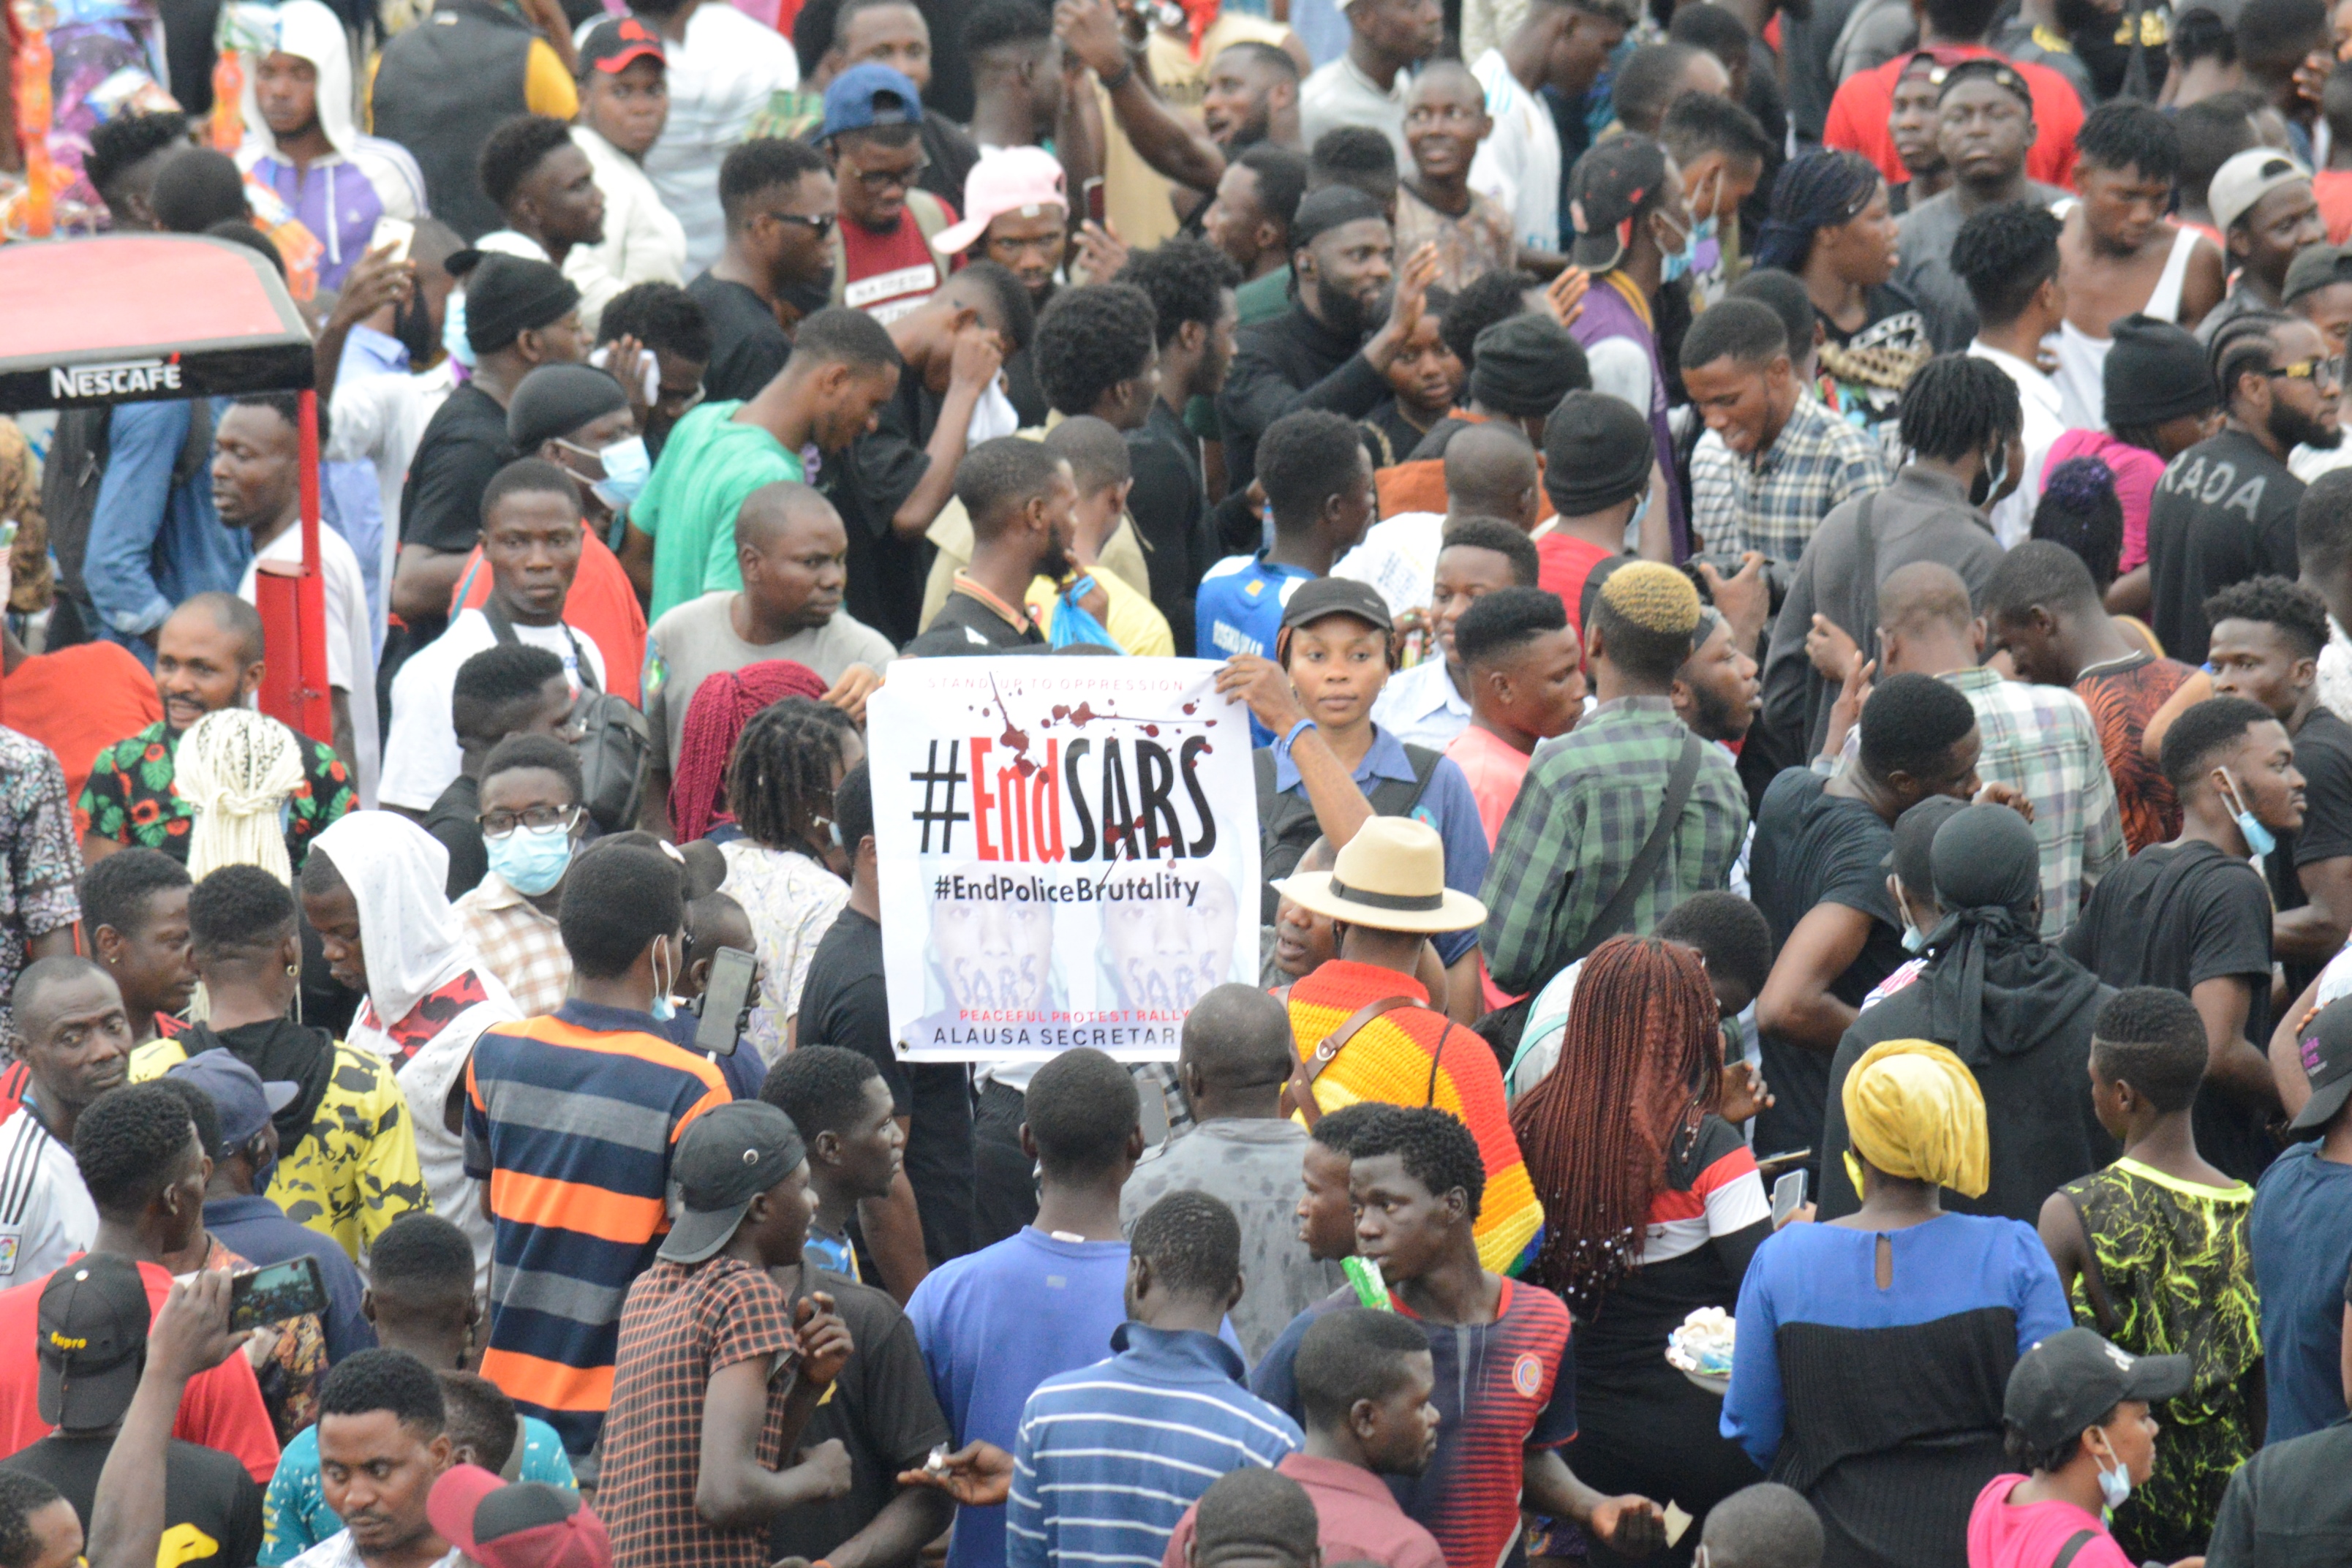 An #EndSARS protest at Alausa, Ikeja, Lagos, Nigeria in October 2020. (Adekunle Ajayi/NurPhoto via Getty Images)